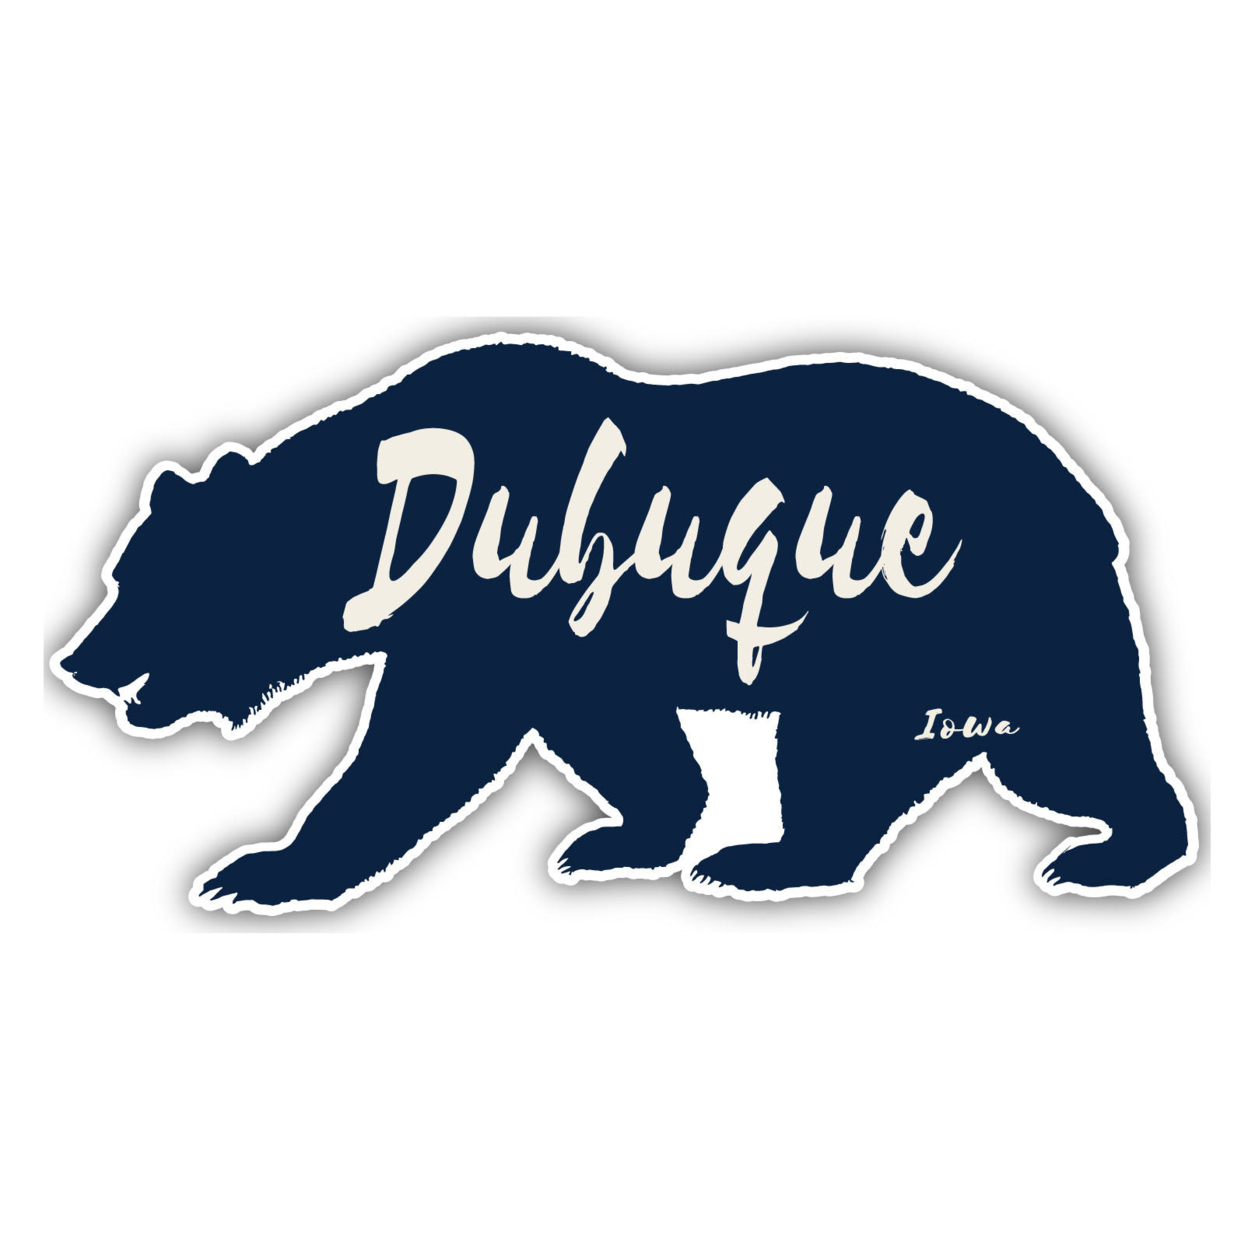 Dubuque Iowa Souvenir Decorative Stickers (Choose Theme And Size) - Single Unit, 8-Inch, Bear